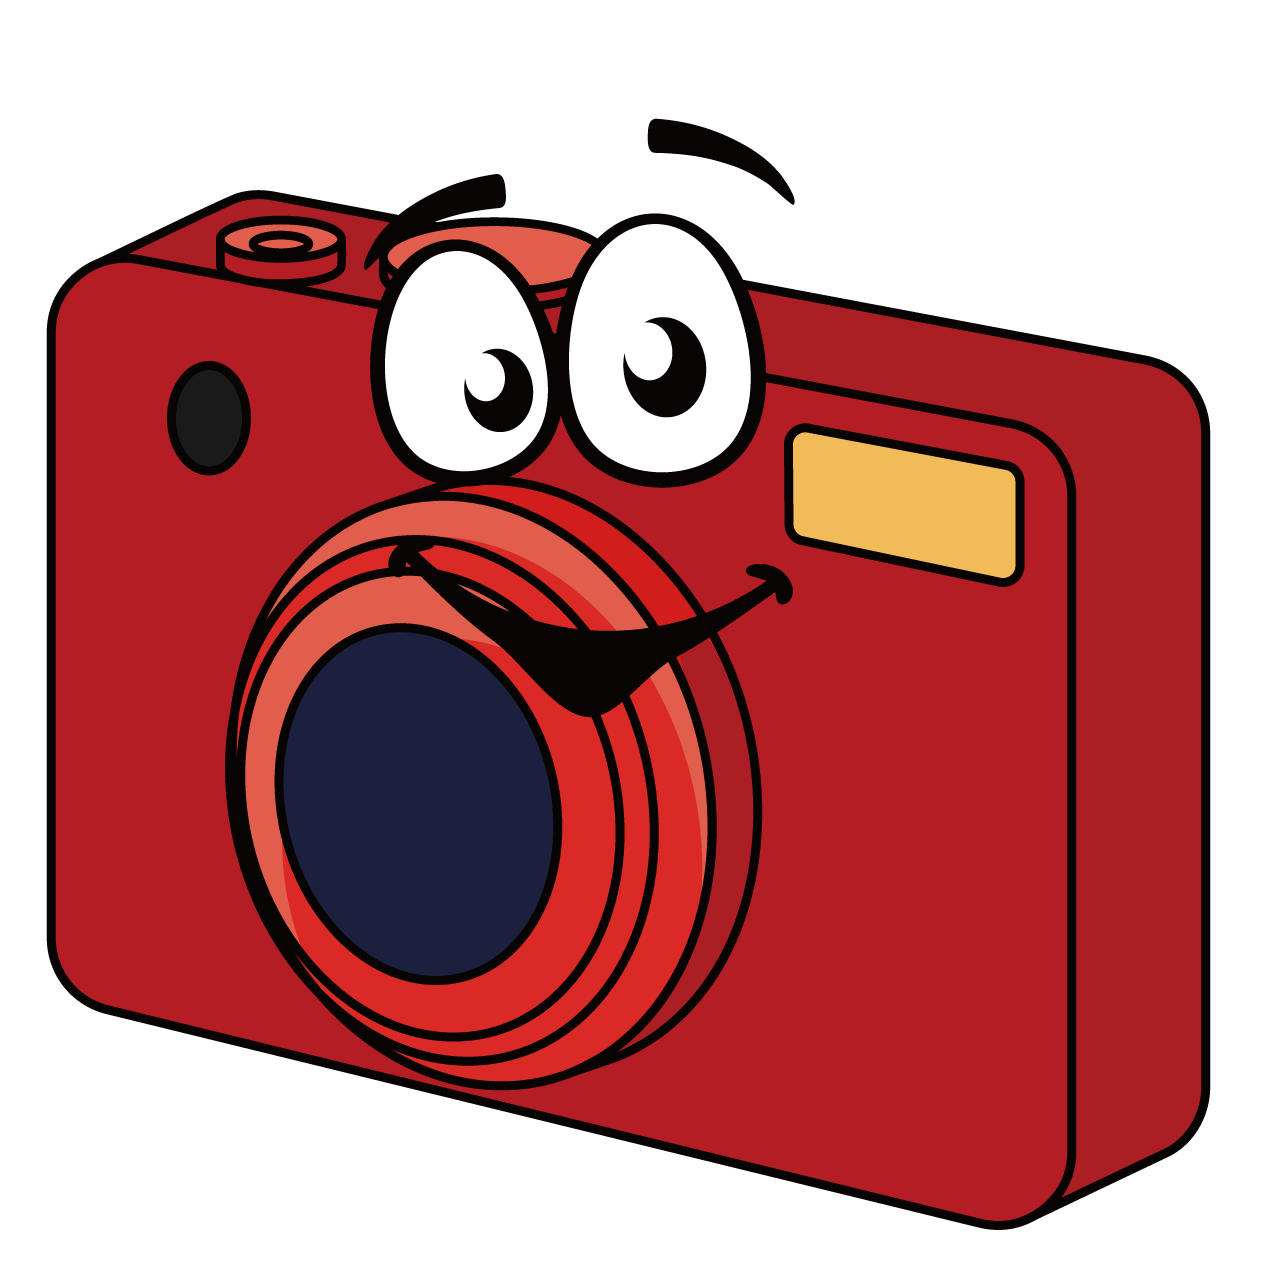 Clipart camera royalty free. Digital cartoon clip art